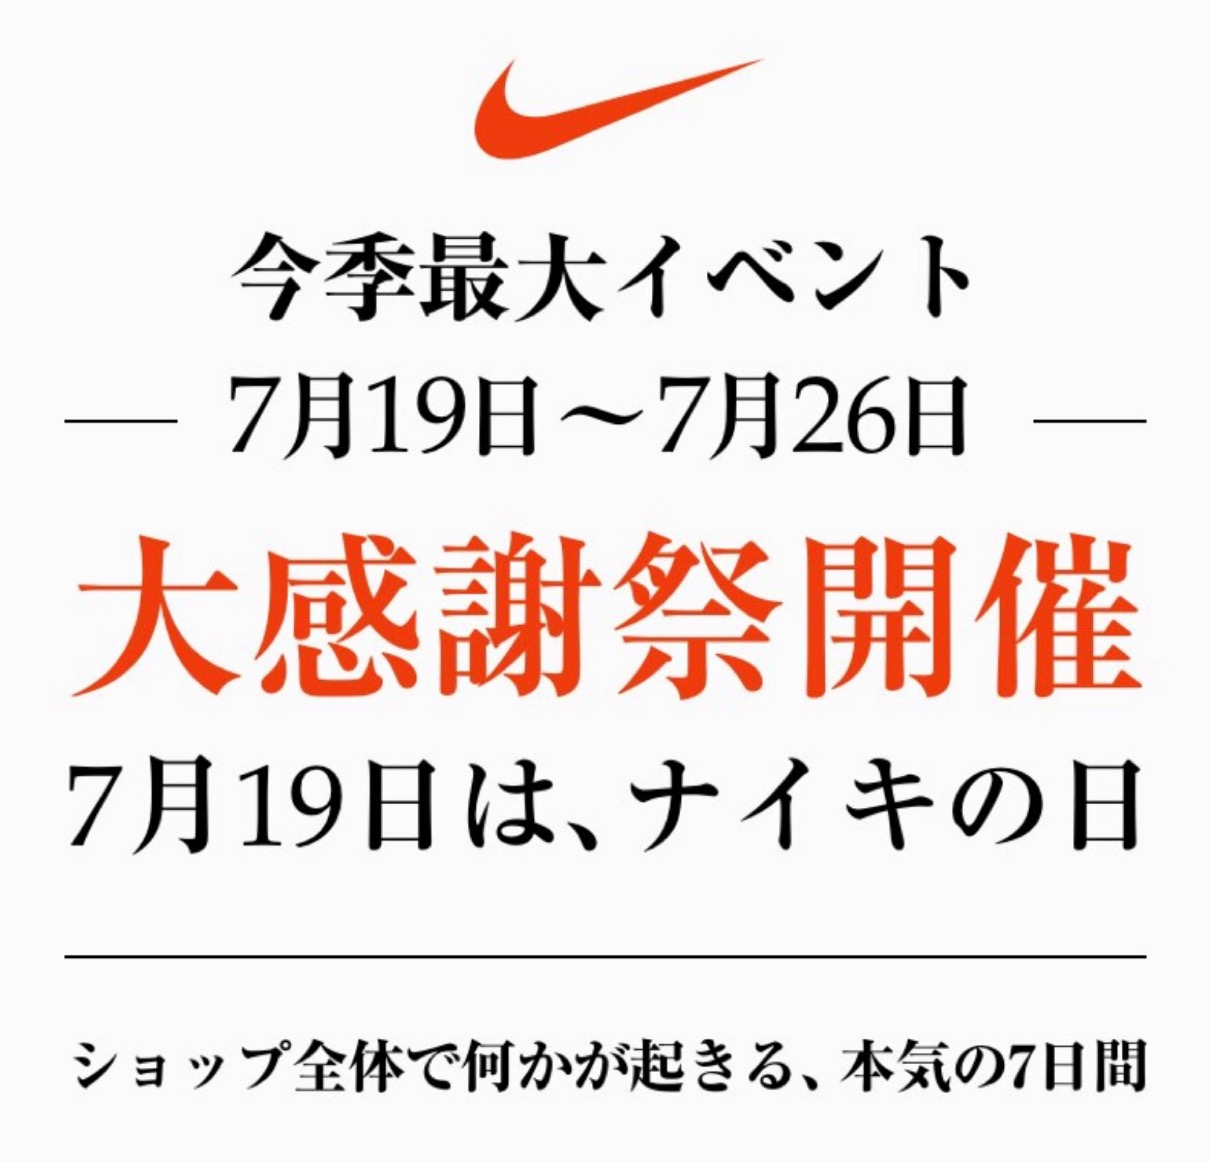 Nike公式楽天】ナイキの日『7月19日』より7日間限定の大感謝祭が開催 UP TO DATE